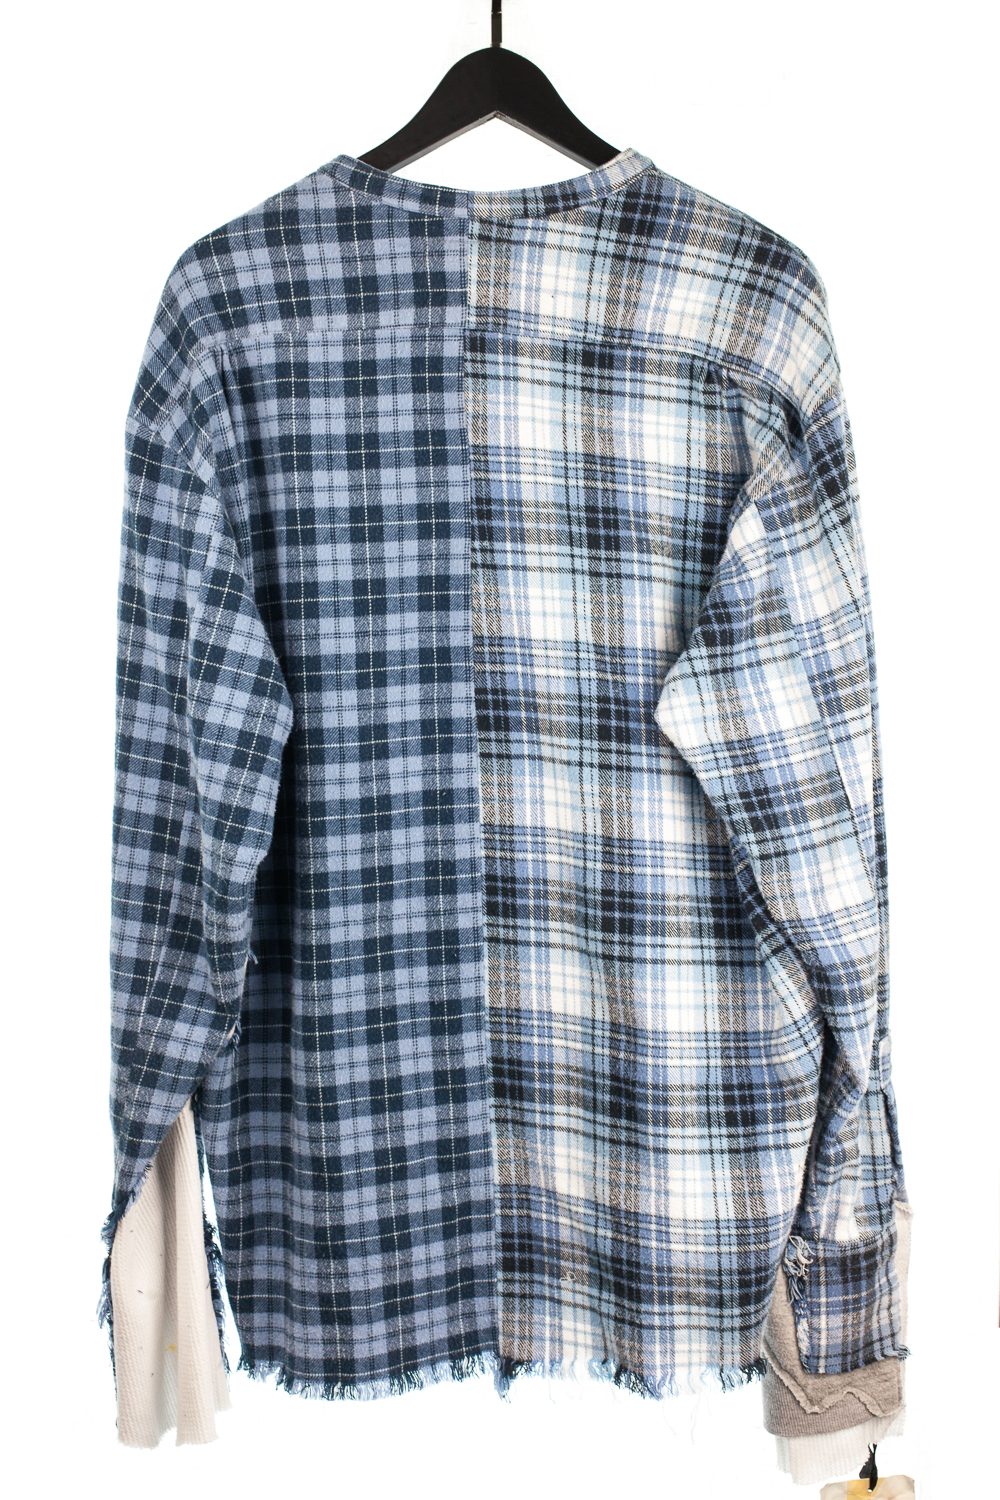 NWT 50/50 Flannel Studio Shirt w/ Pouch Pocket